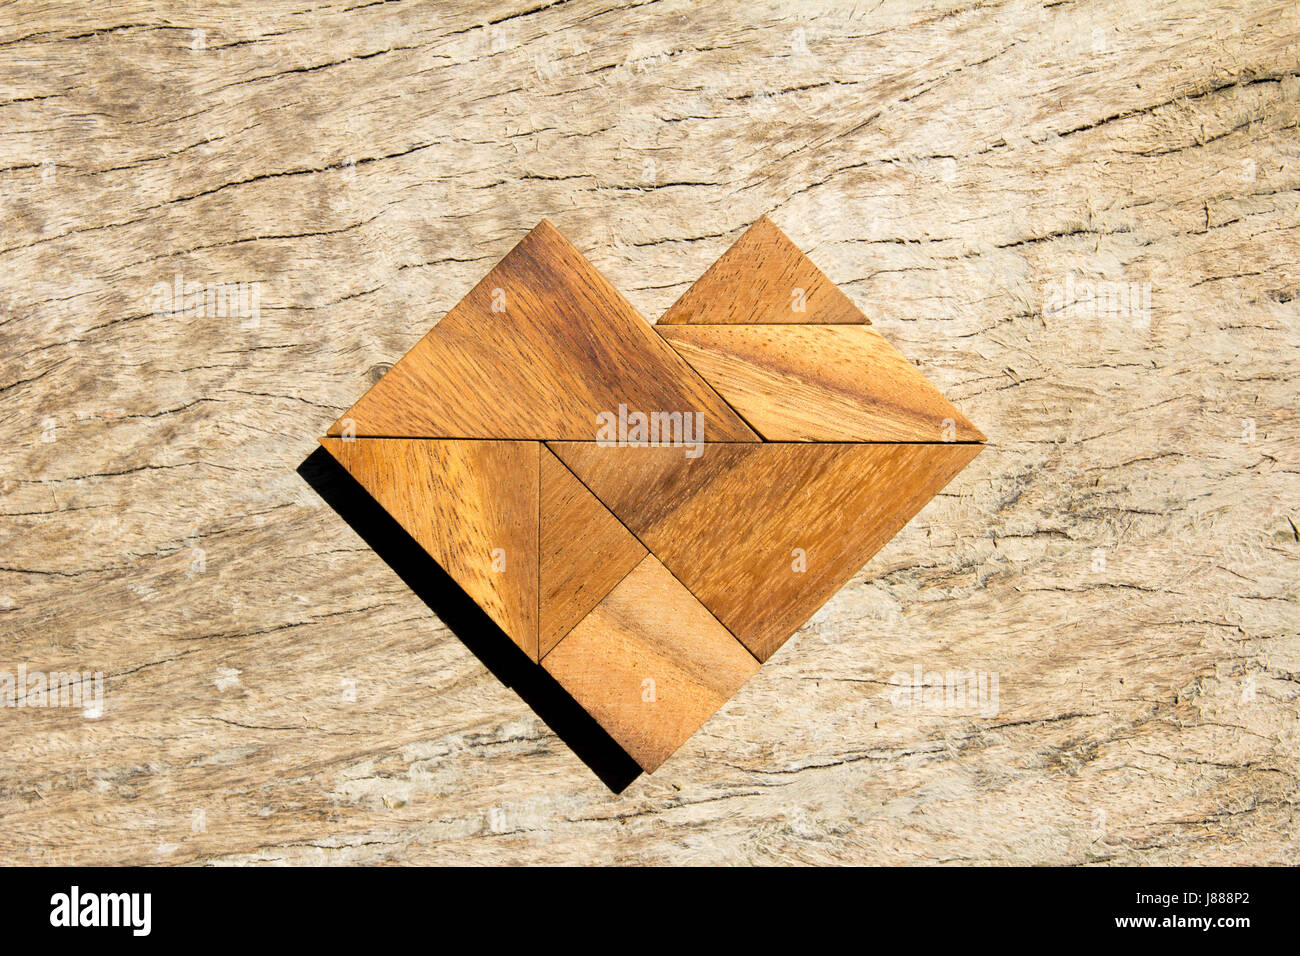 https://c8.alamy.com/comp/J888P2/tangram-puzzle-in-heart-shape-on-wooden-background-J888P2.jpg